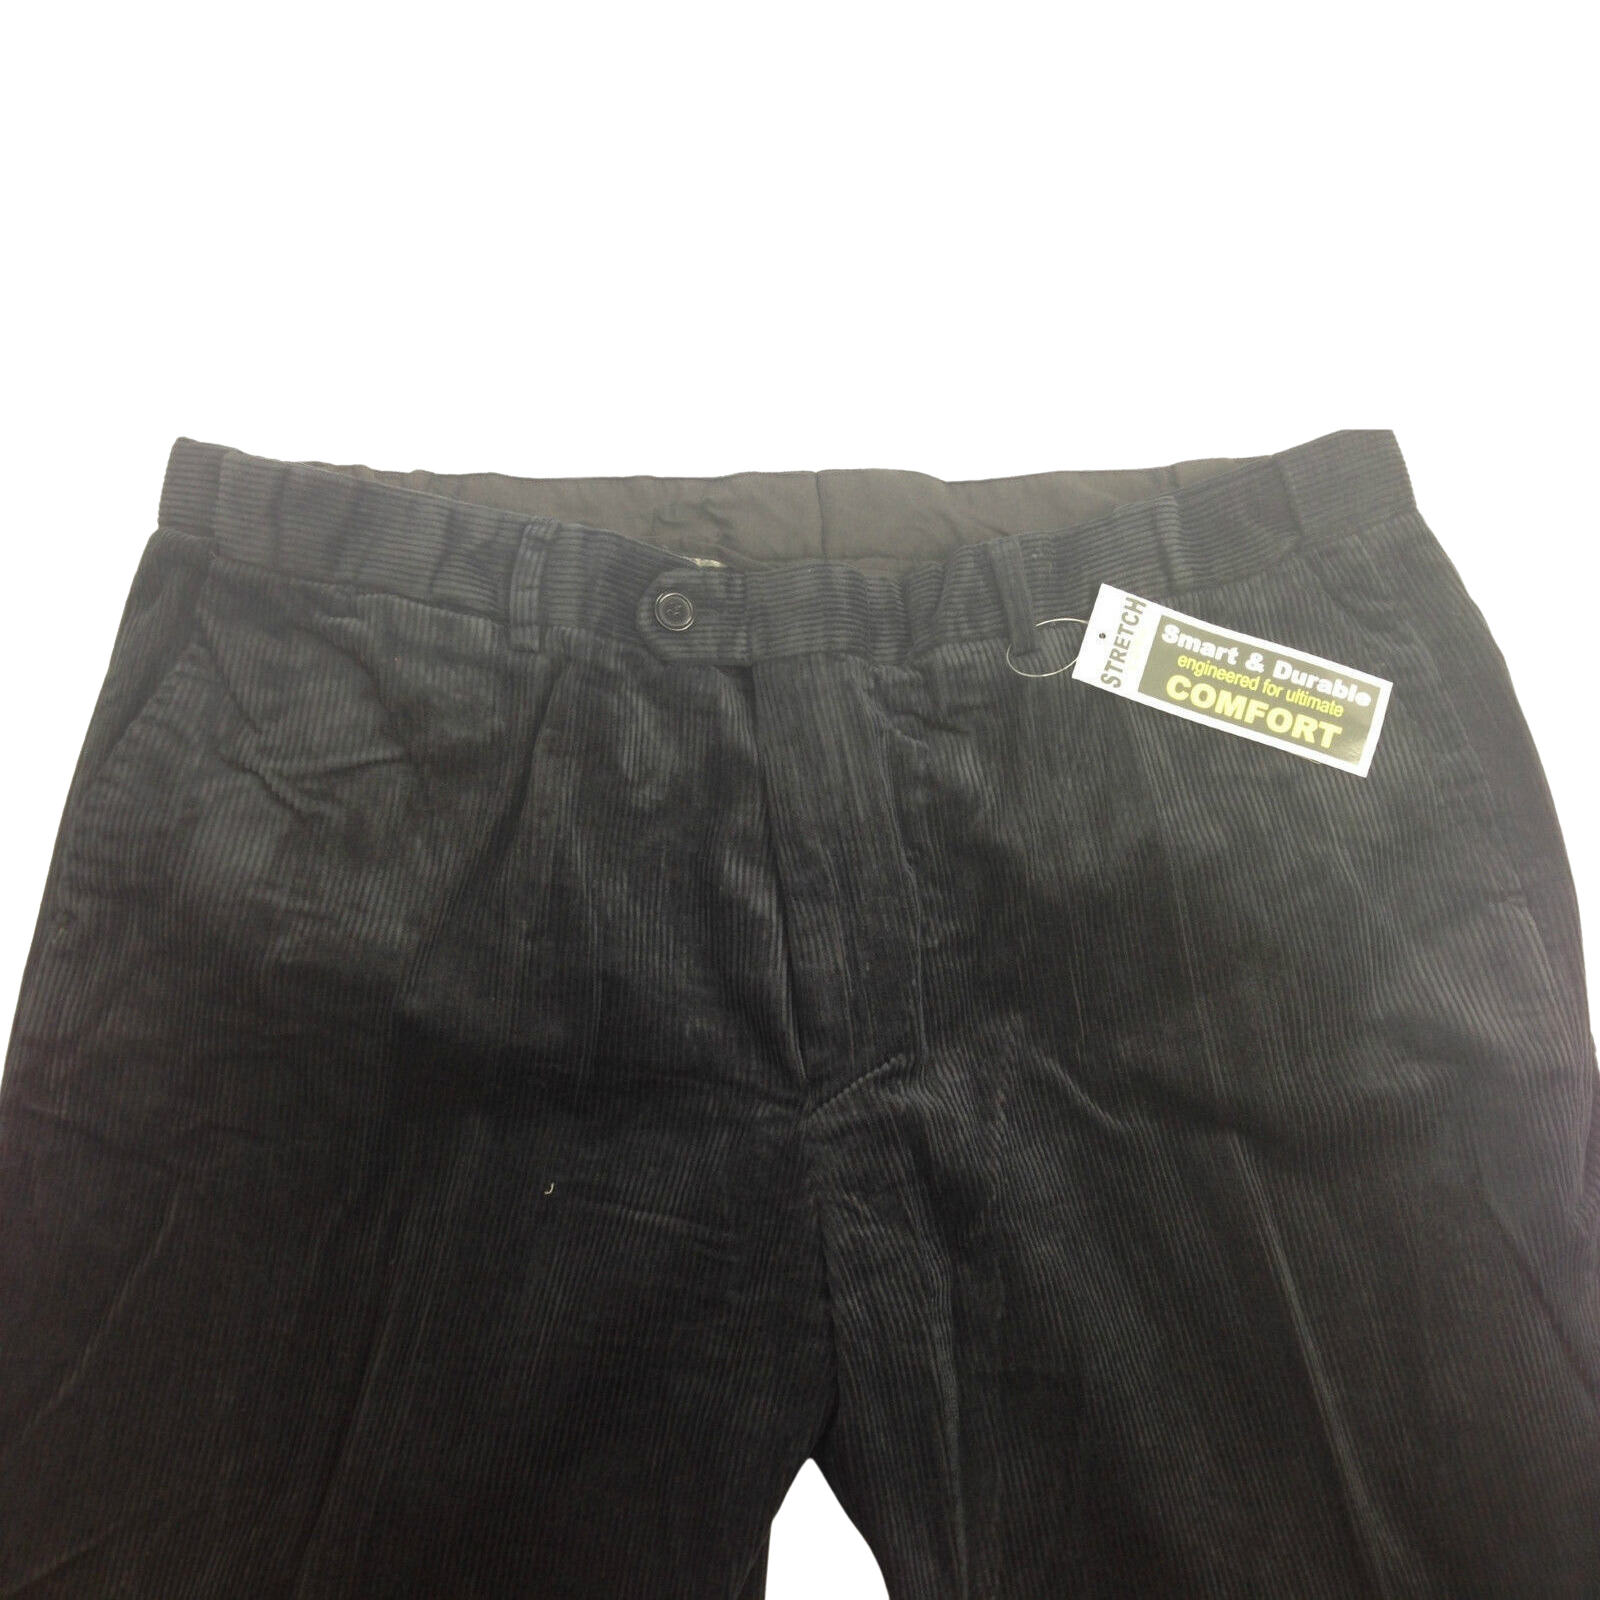 MENS CORDUROY PANTS Trousers Cords Casual STRETCH COTTON Size 32"-44" Adjustable